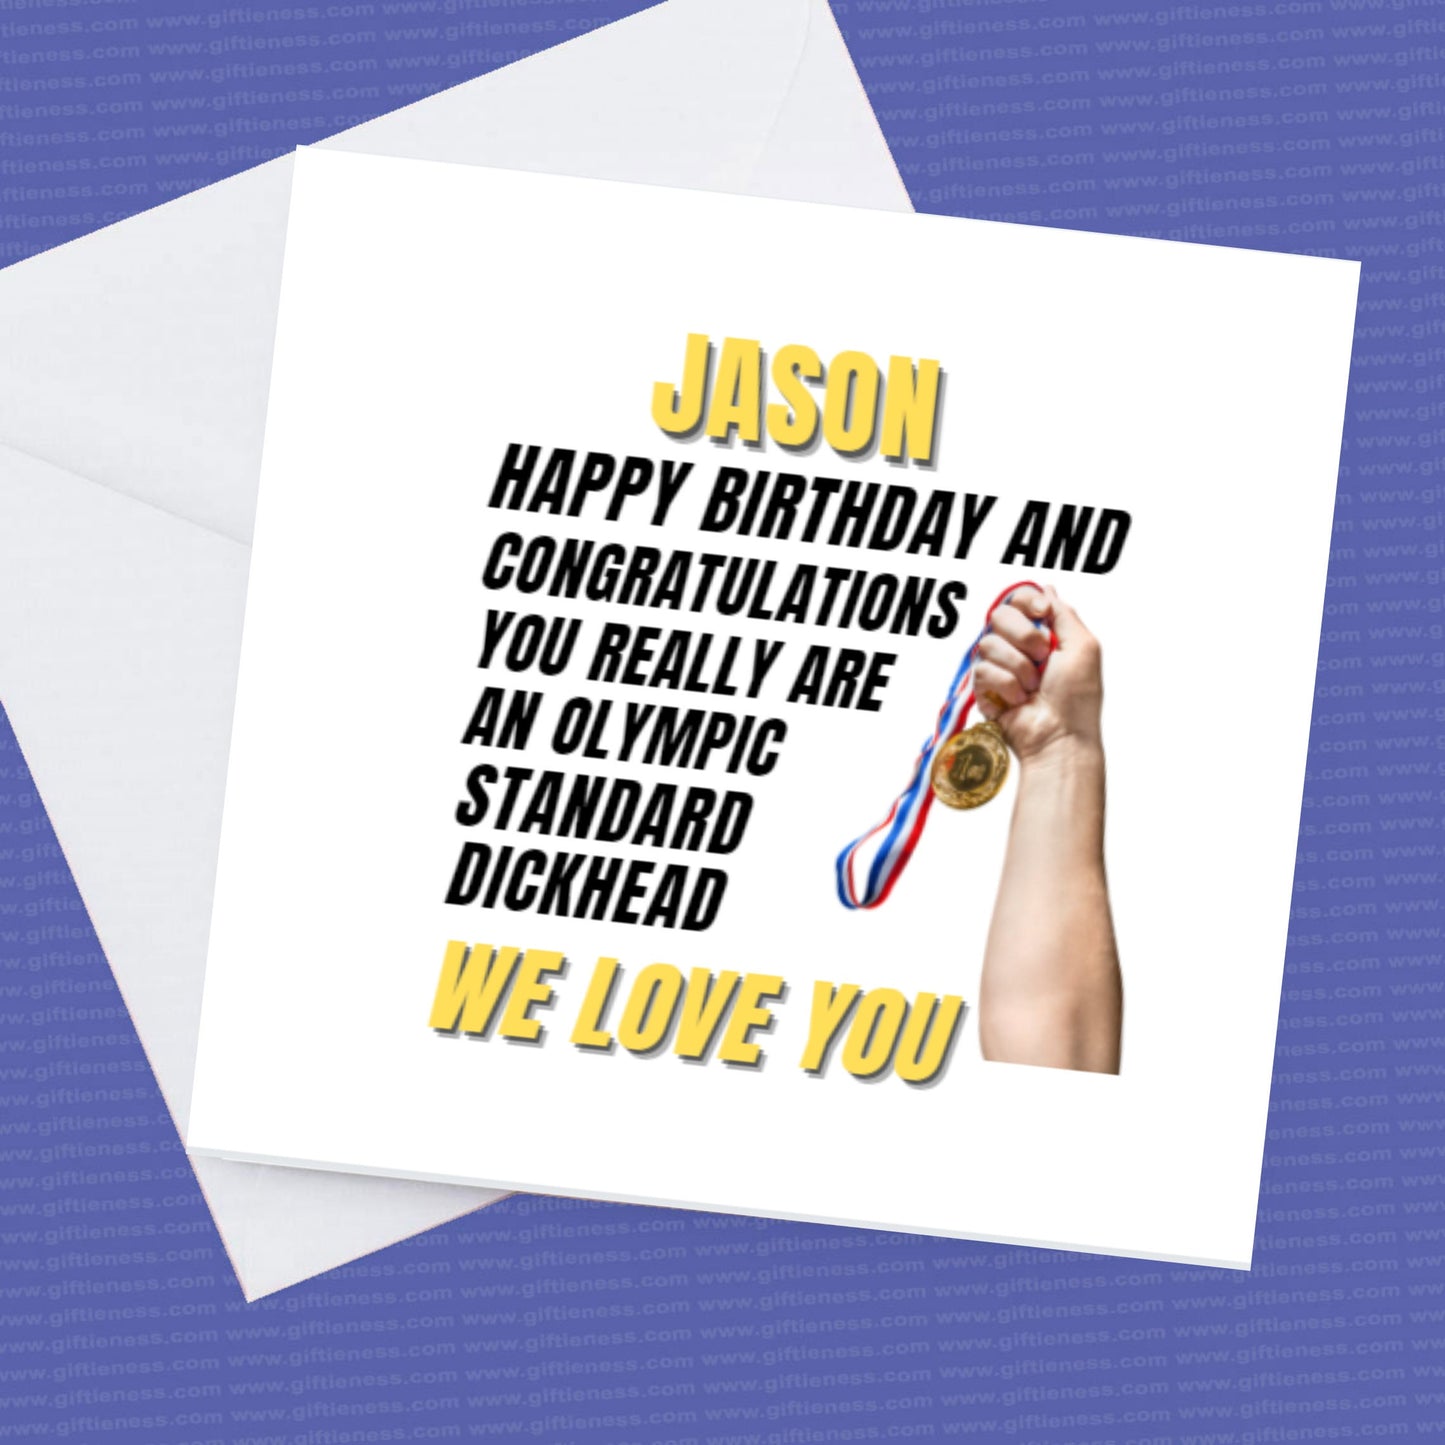 Personalised Olympic Dickhead Birthday Card, Olympic Standard Dickhead Card